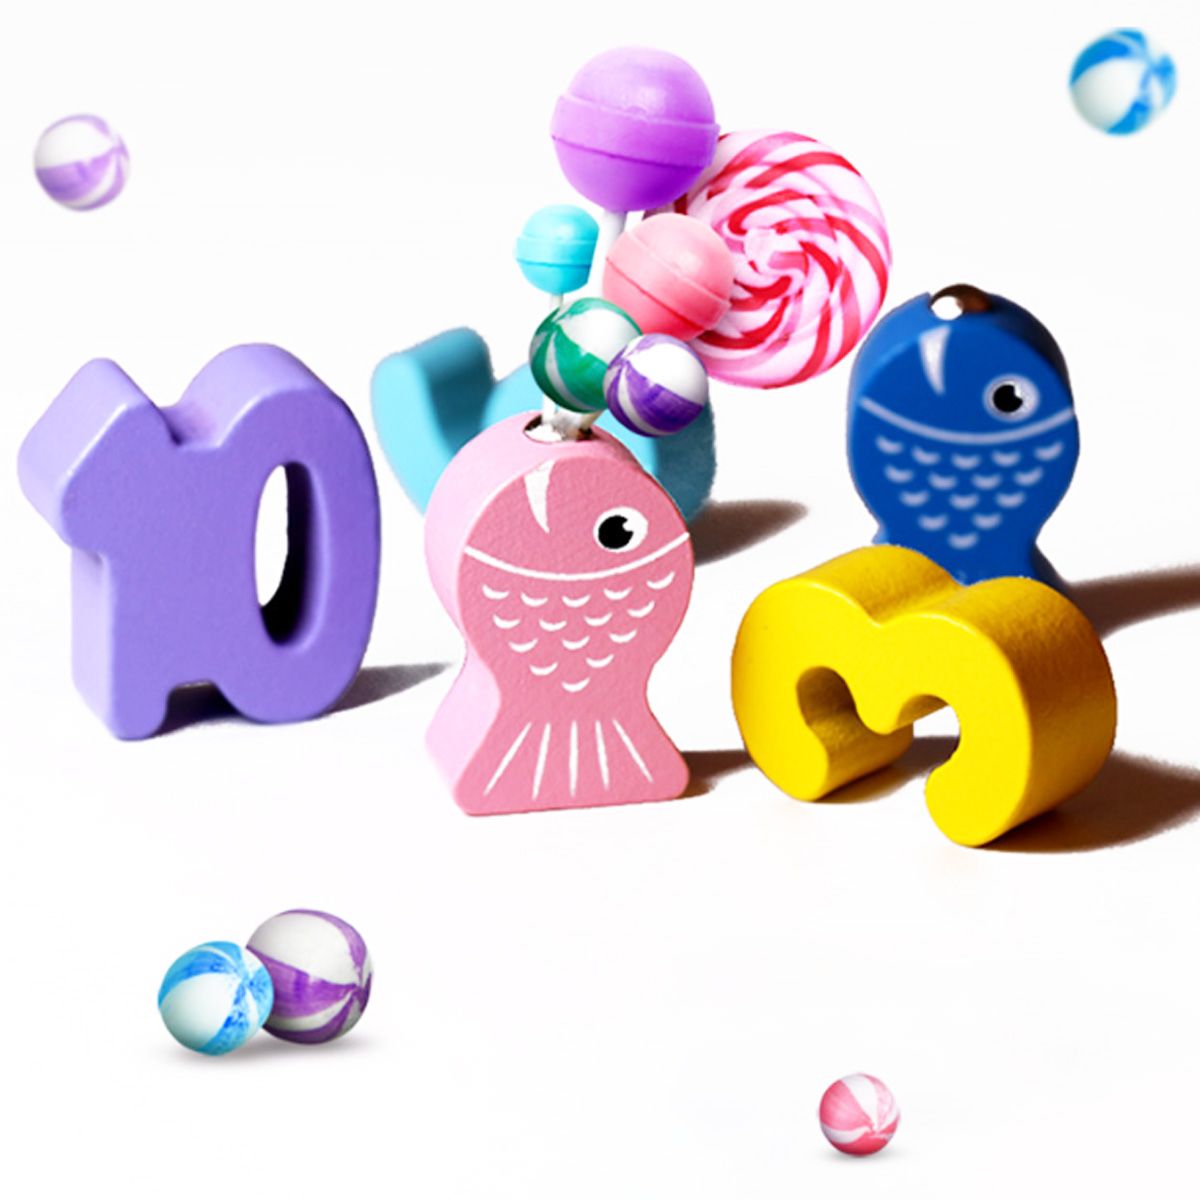 Preschool-Learning-Montessori-Math-Counting-Board-Digital-Shape-Pairing-Educational-Toys-1474460